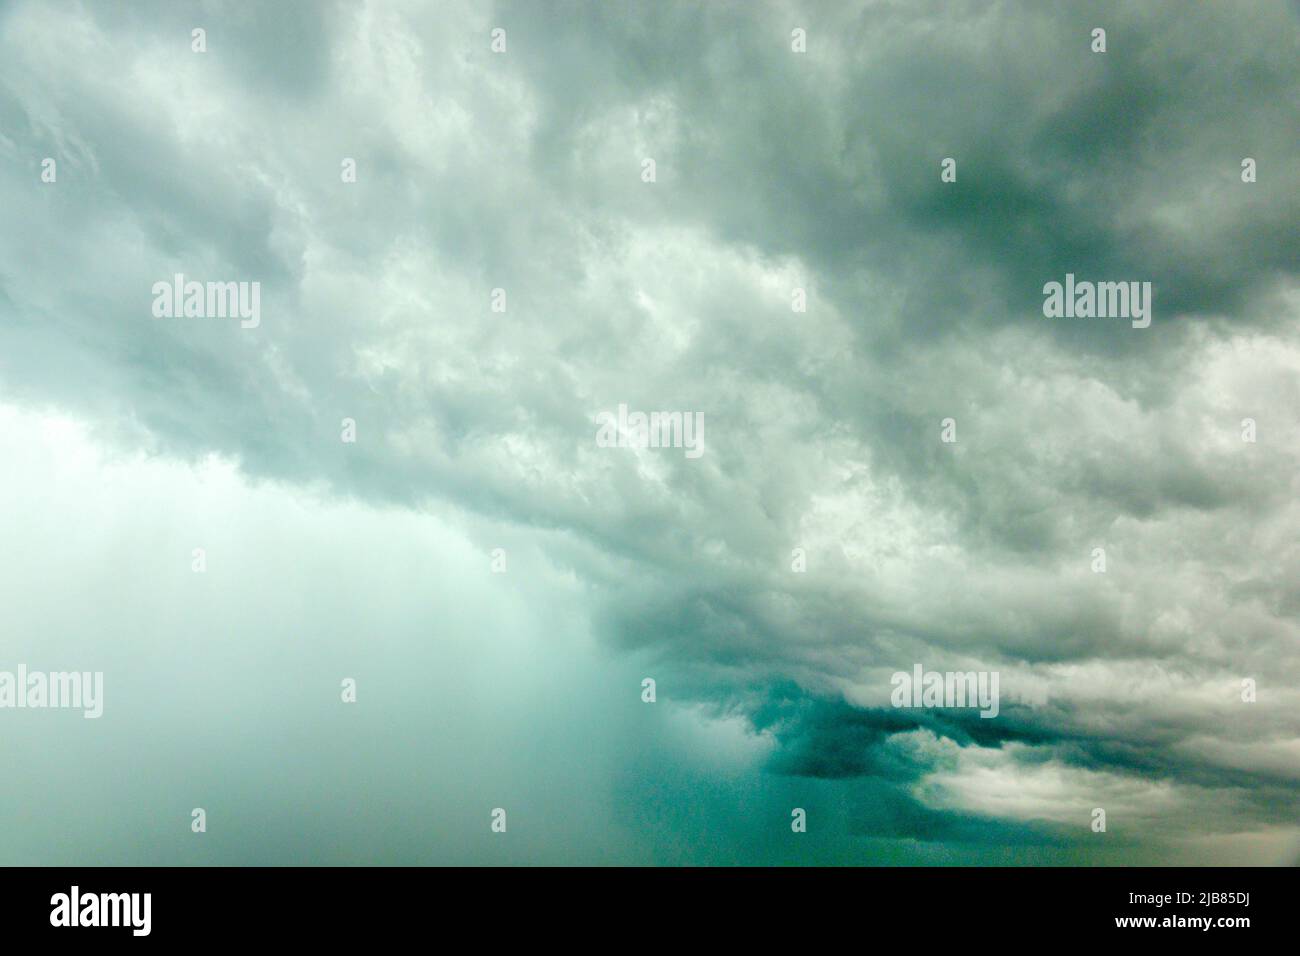 Miami Beach Florida, Himmel Wolken starken Sturm Regensturm Wetter Front regen Regenguss Stockfoto